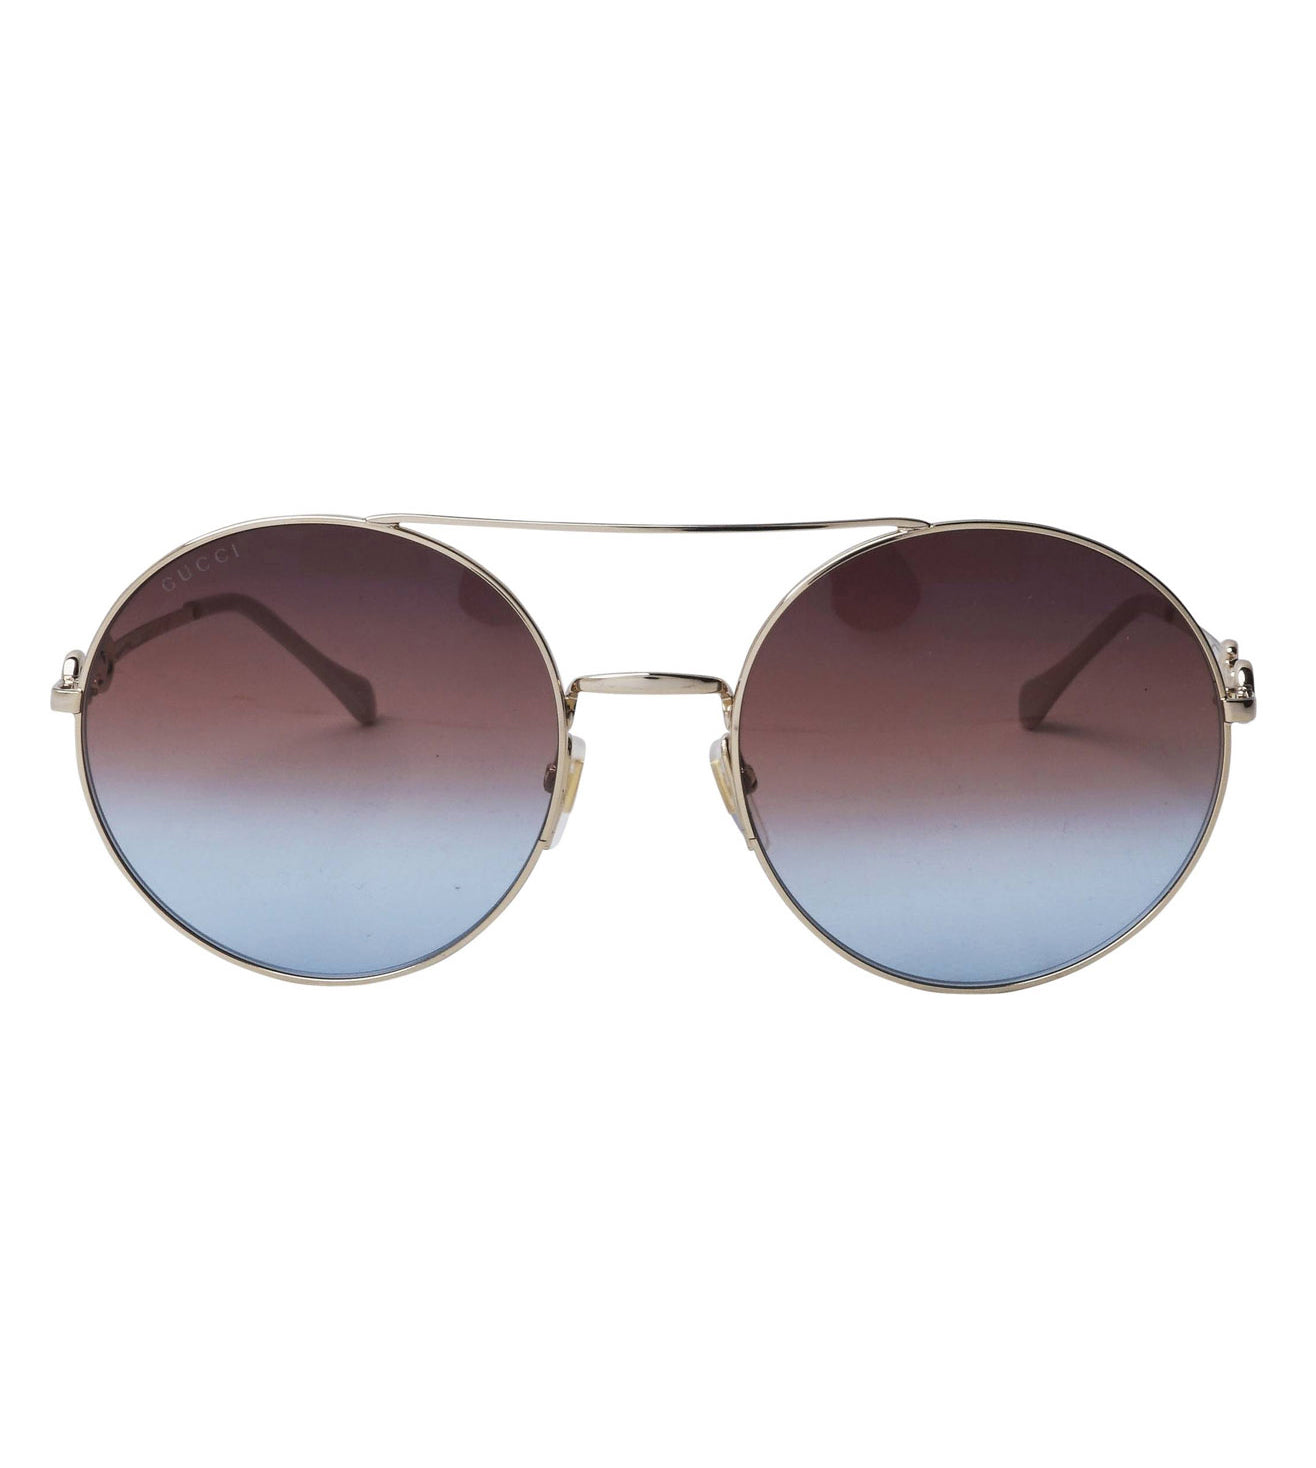 Gucci Women's Brown Aviator Sunglasses